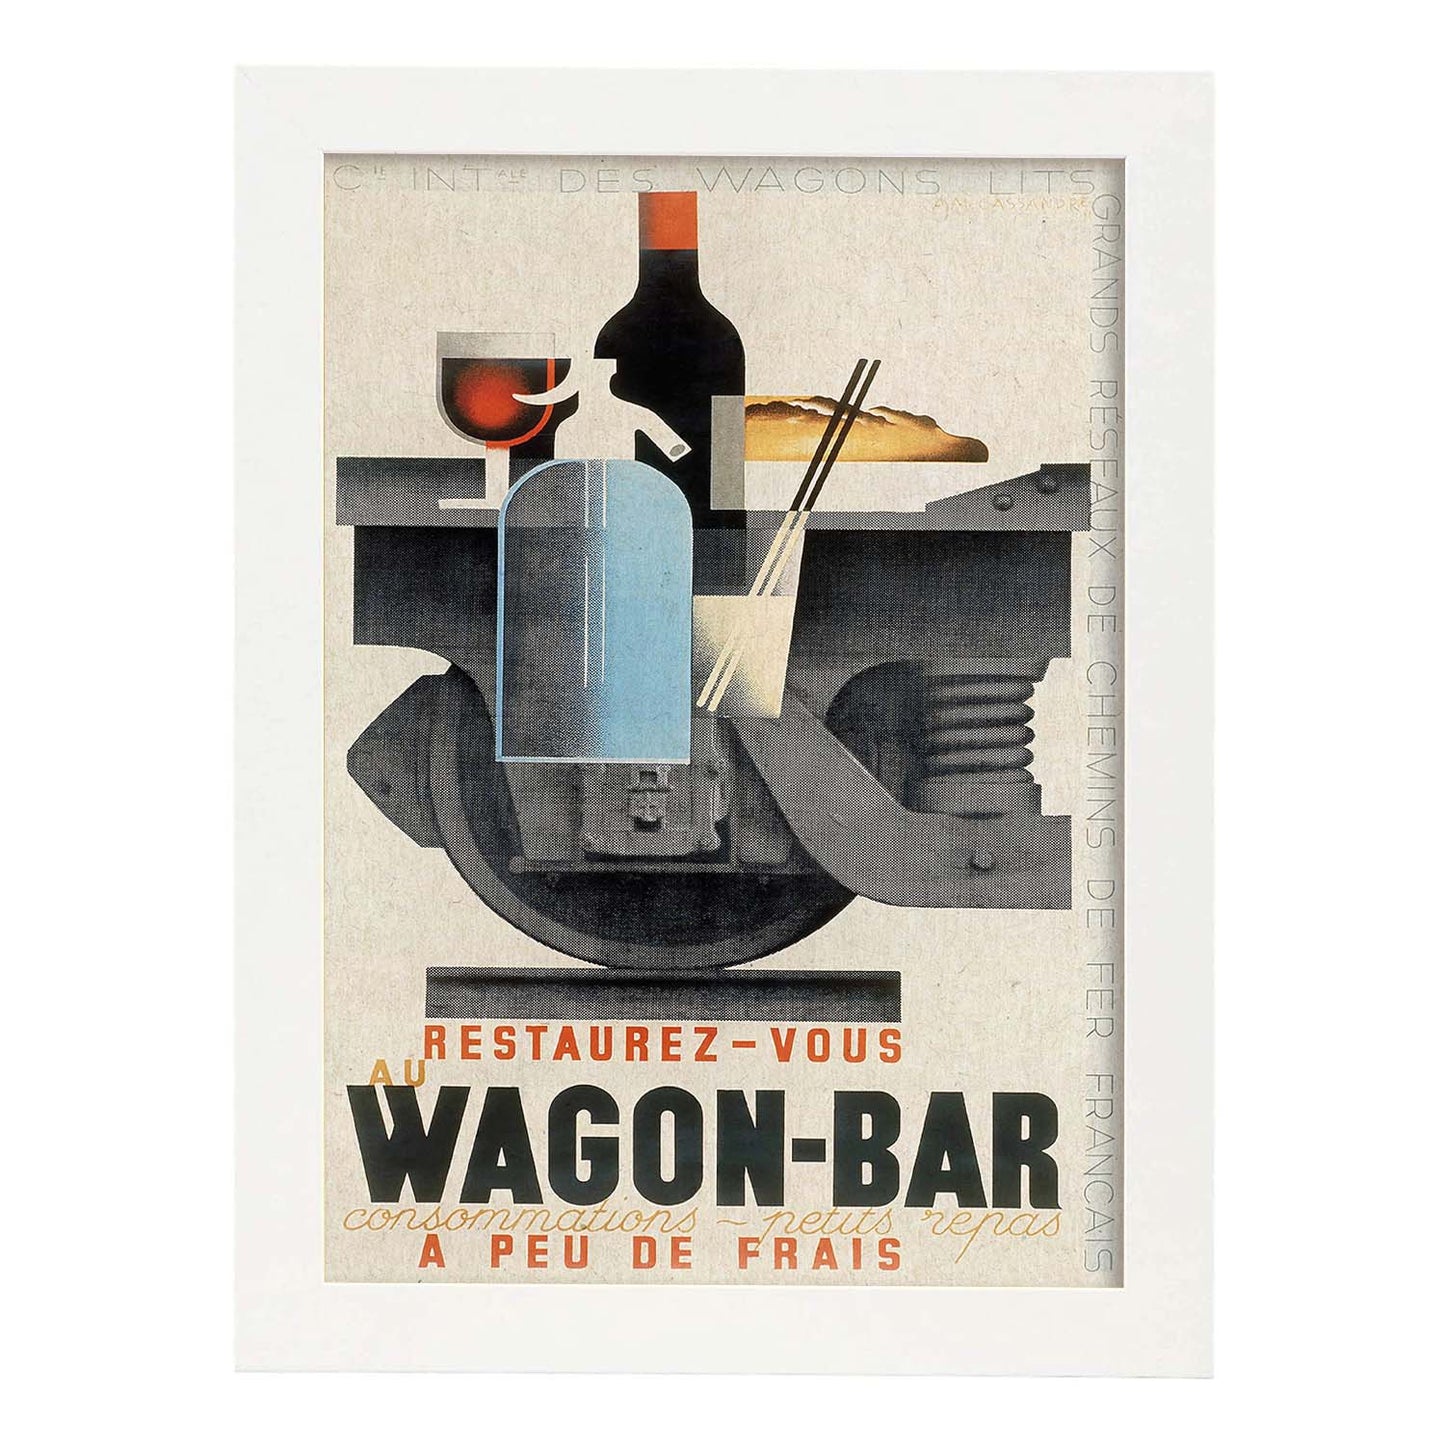 Poster vintage. Cartel vintage anuncio Wagon-Bar a Peu de Frais.-Artwork-Nacnic-A3-Marco Blanco-Nacnic Estudio SL